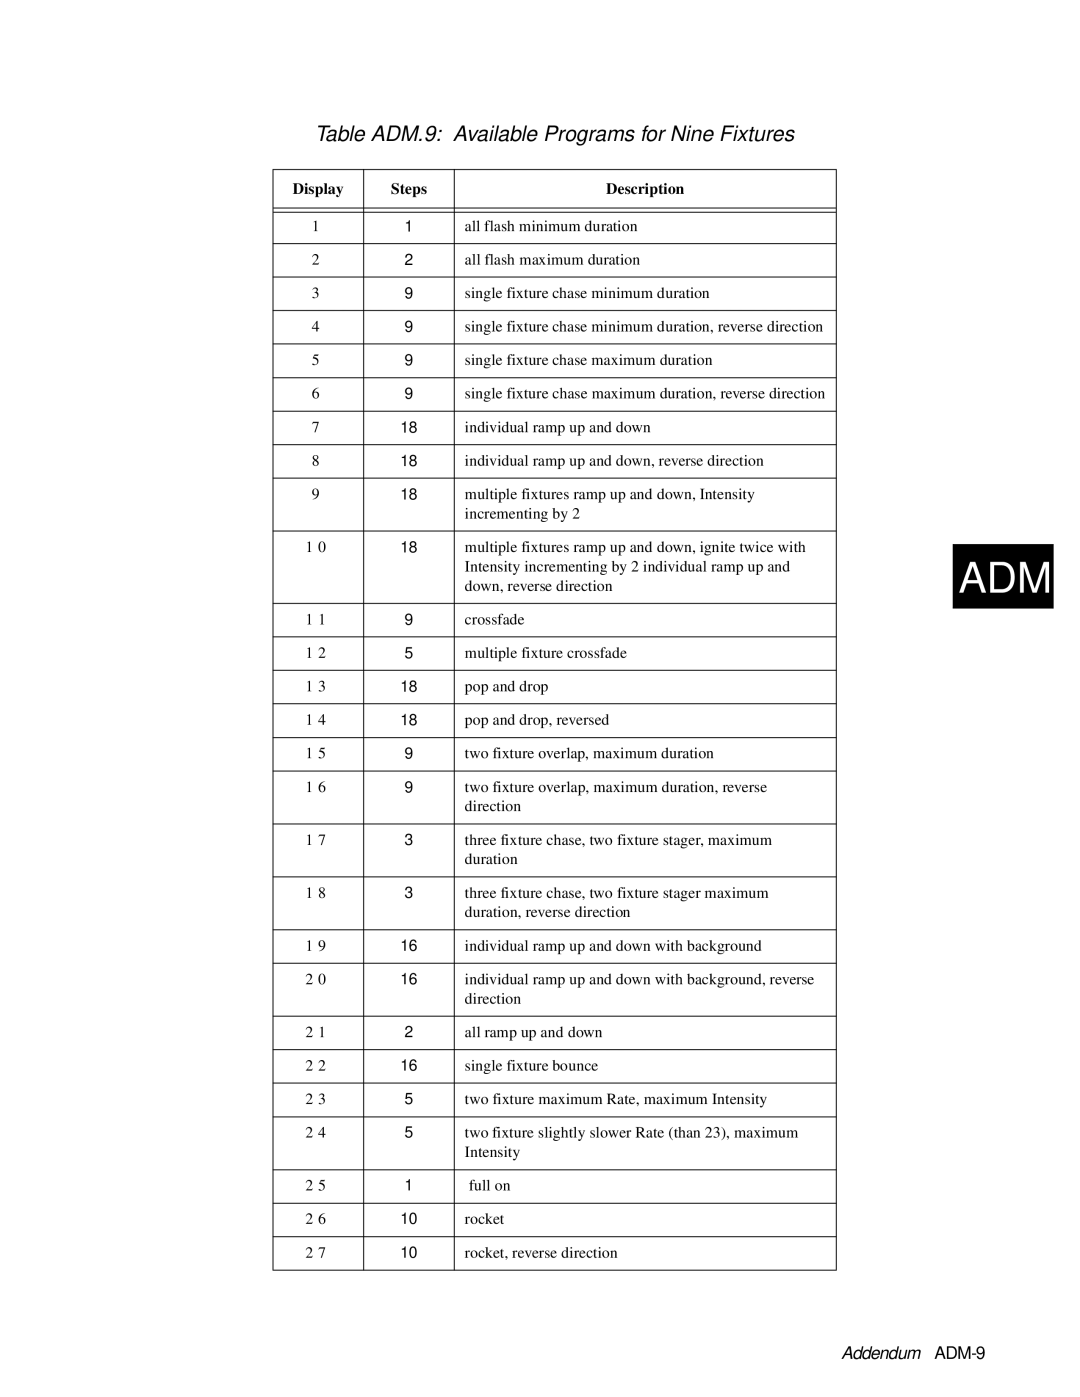 High End Systems AF1000 Table ADM.9 Available Programs for Nine Fixtures, Addendum ADM-9, Display, Steps, Description 